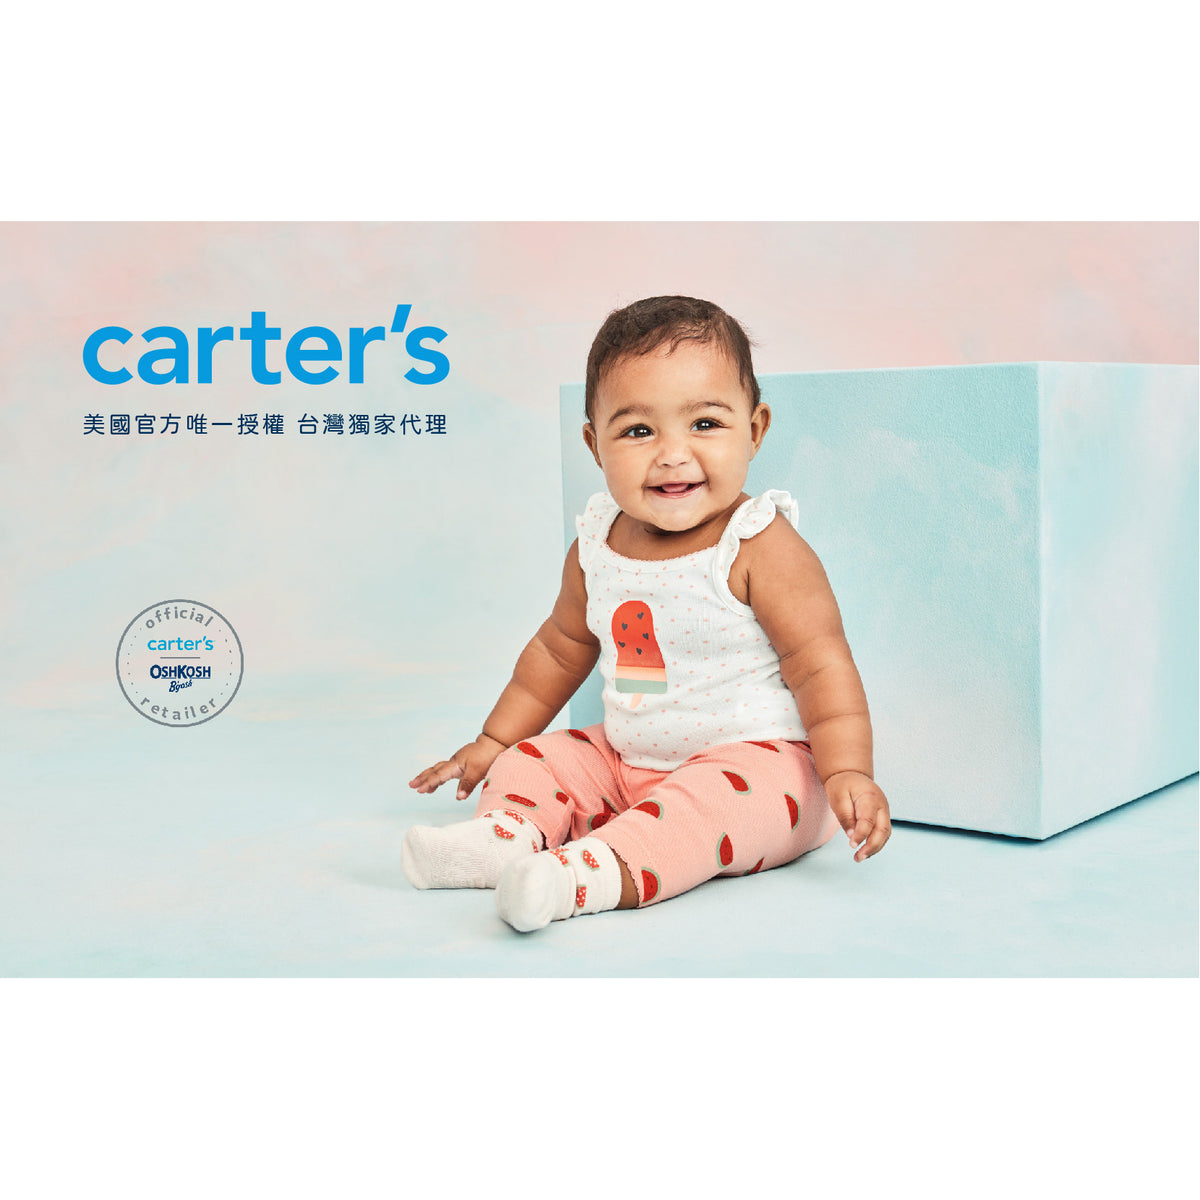 Carter's 清涼蝴蝶結2件組套裝(6M-24M)